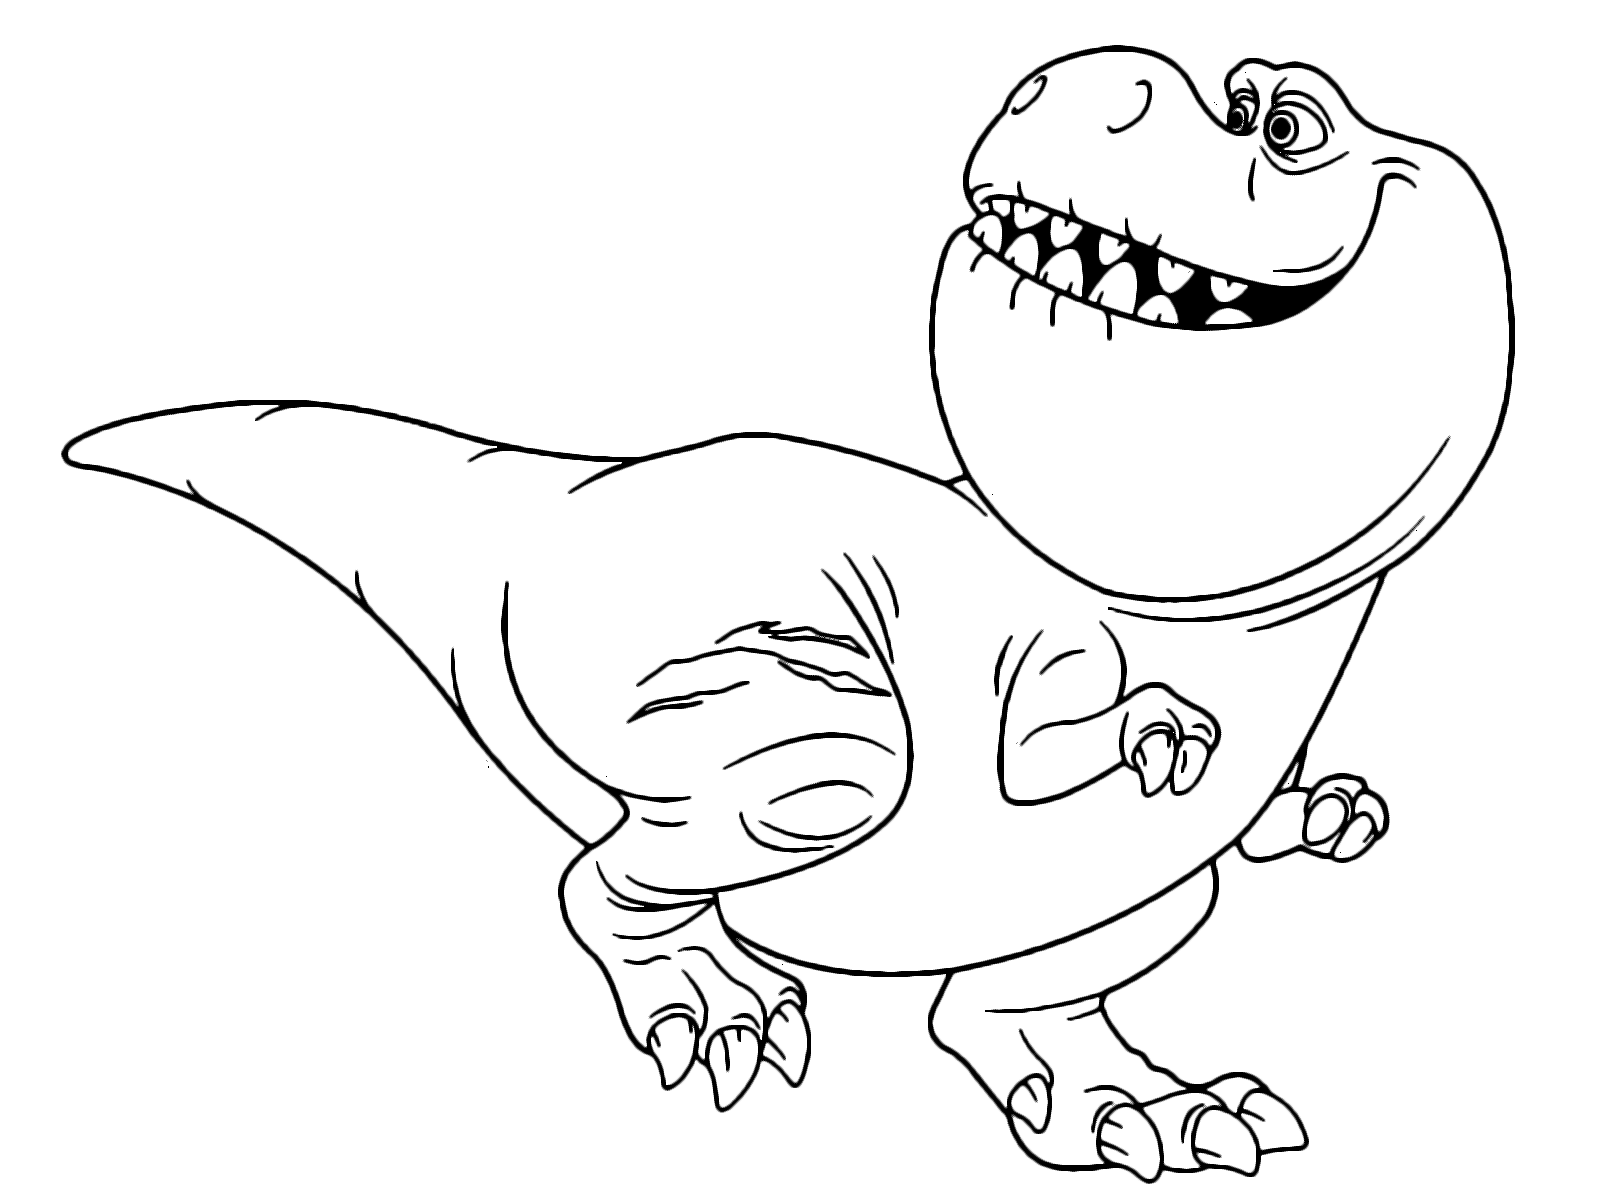 The Good Dinosaur - Butch's younger son Nash